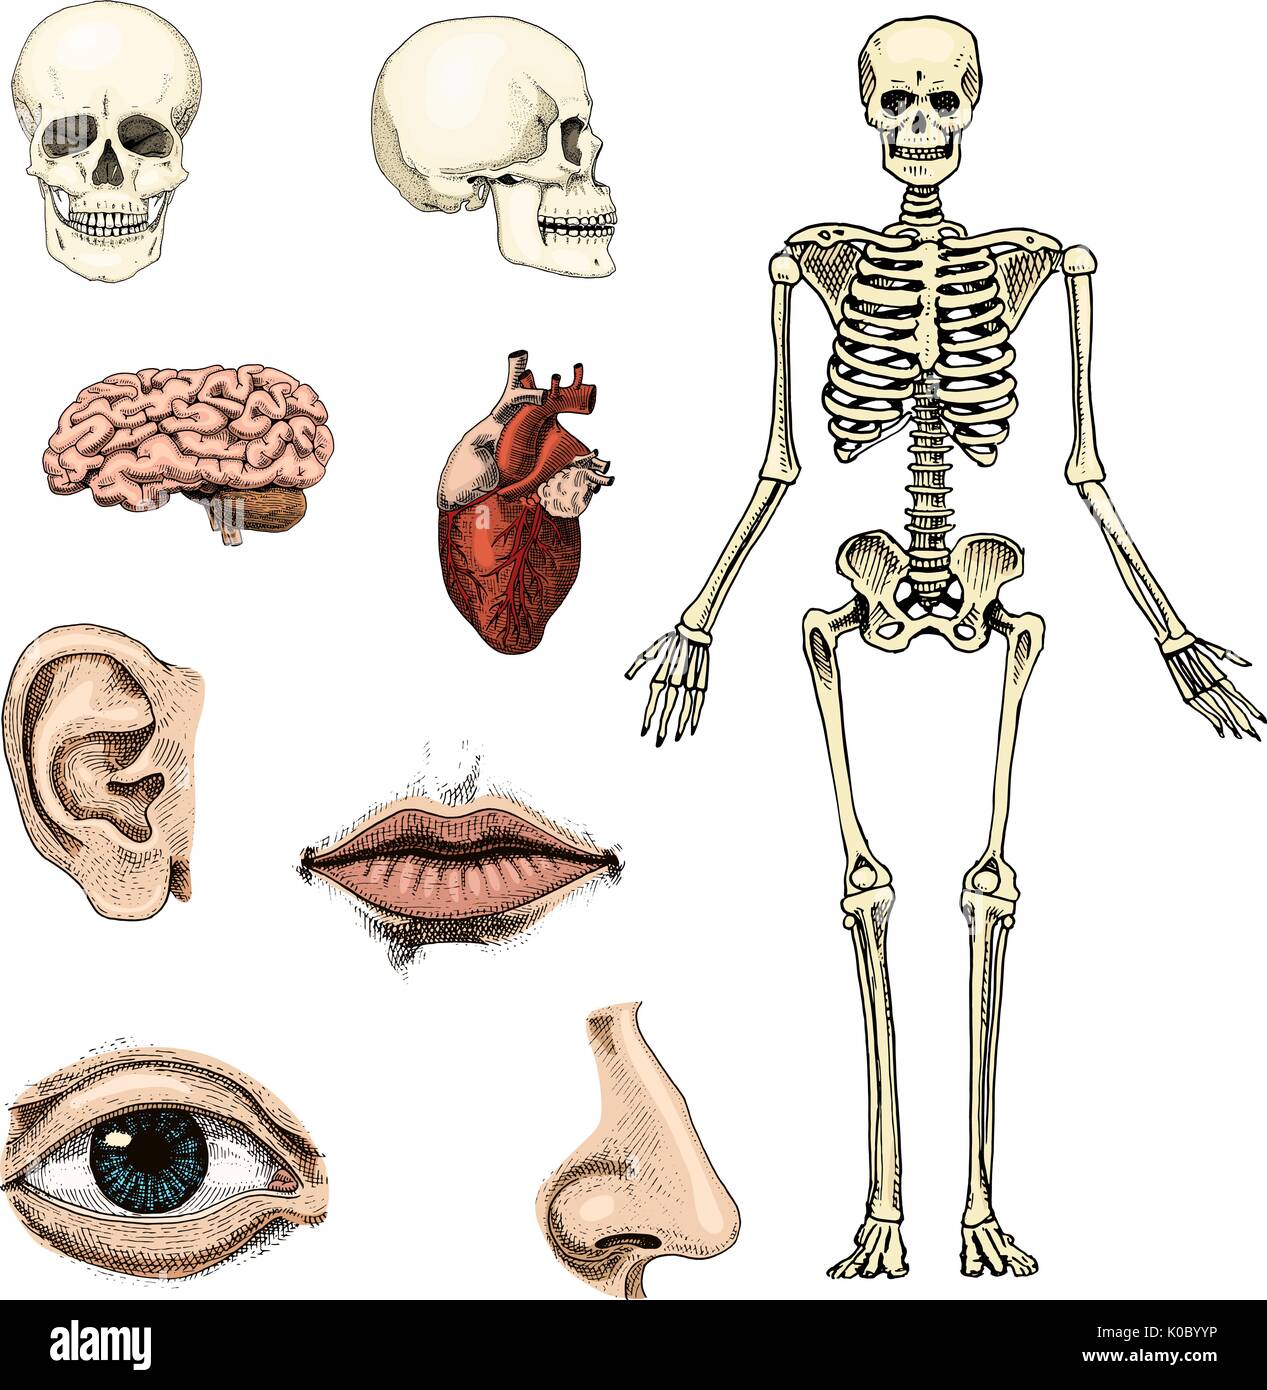 Skeleton Has Brain Handsbrain Skeletonmodel Skeleton Stock Photo